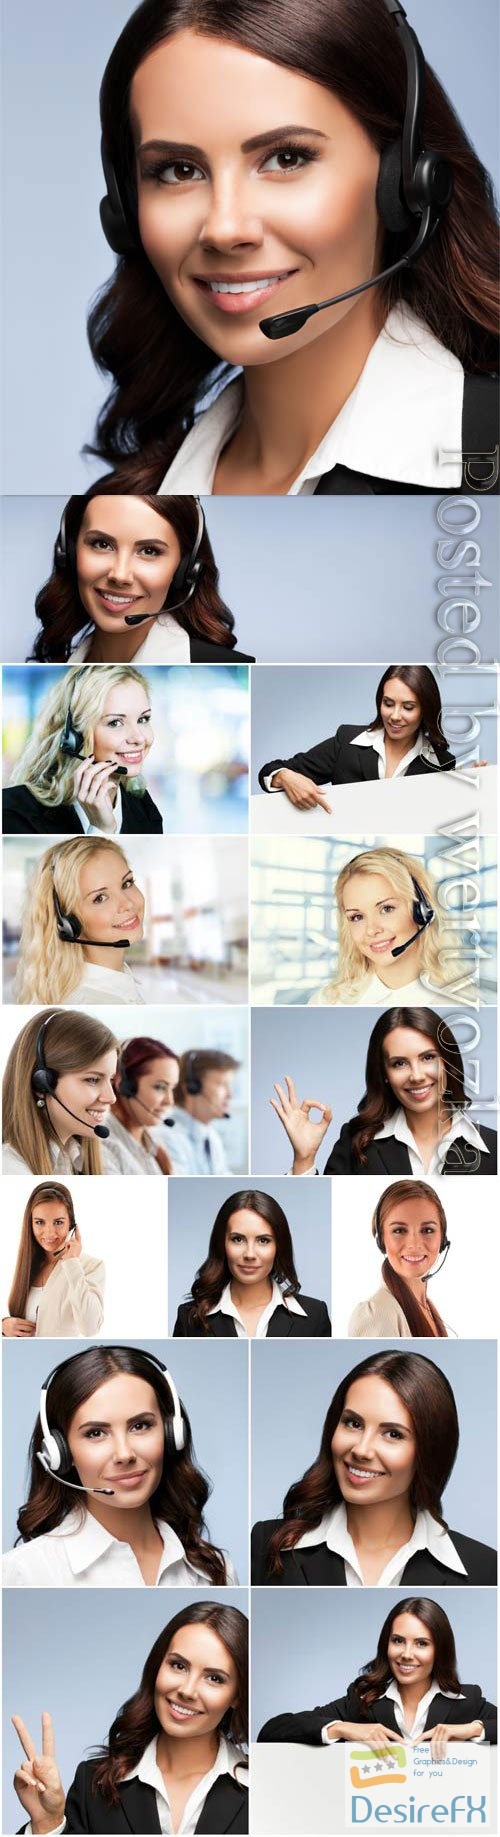 Female operators stock photo